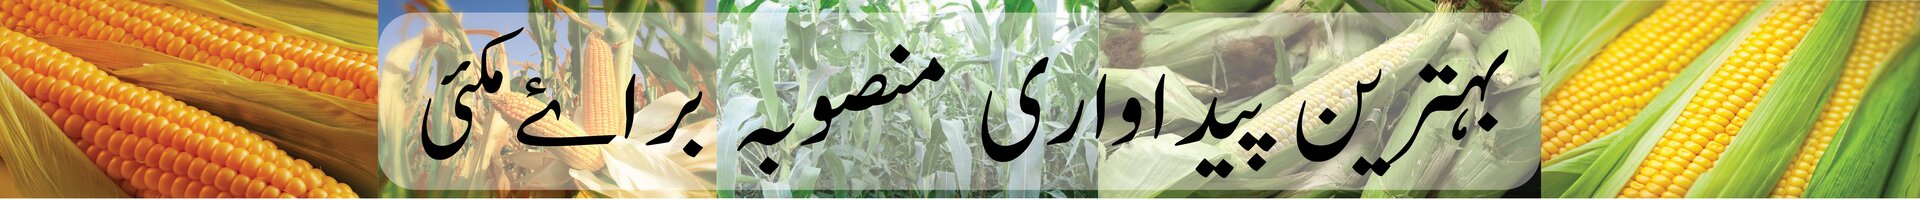 Plan for good cultivation of corn crop / Ø¨ÛØªØ±ÛŒÙ† Ù¾ÛŒØ¯Ø§ÙˆØ§Ø±ÛŒ Ù…Ù†ØµÙˆØ¨Û Ø¨Ø±Ø§Û“ Ù…Ú©Ø¦ÛŒ